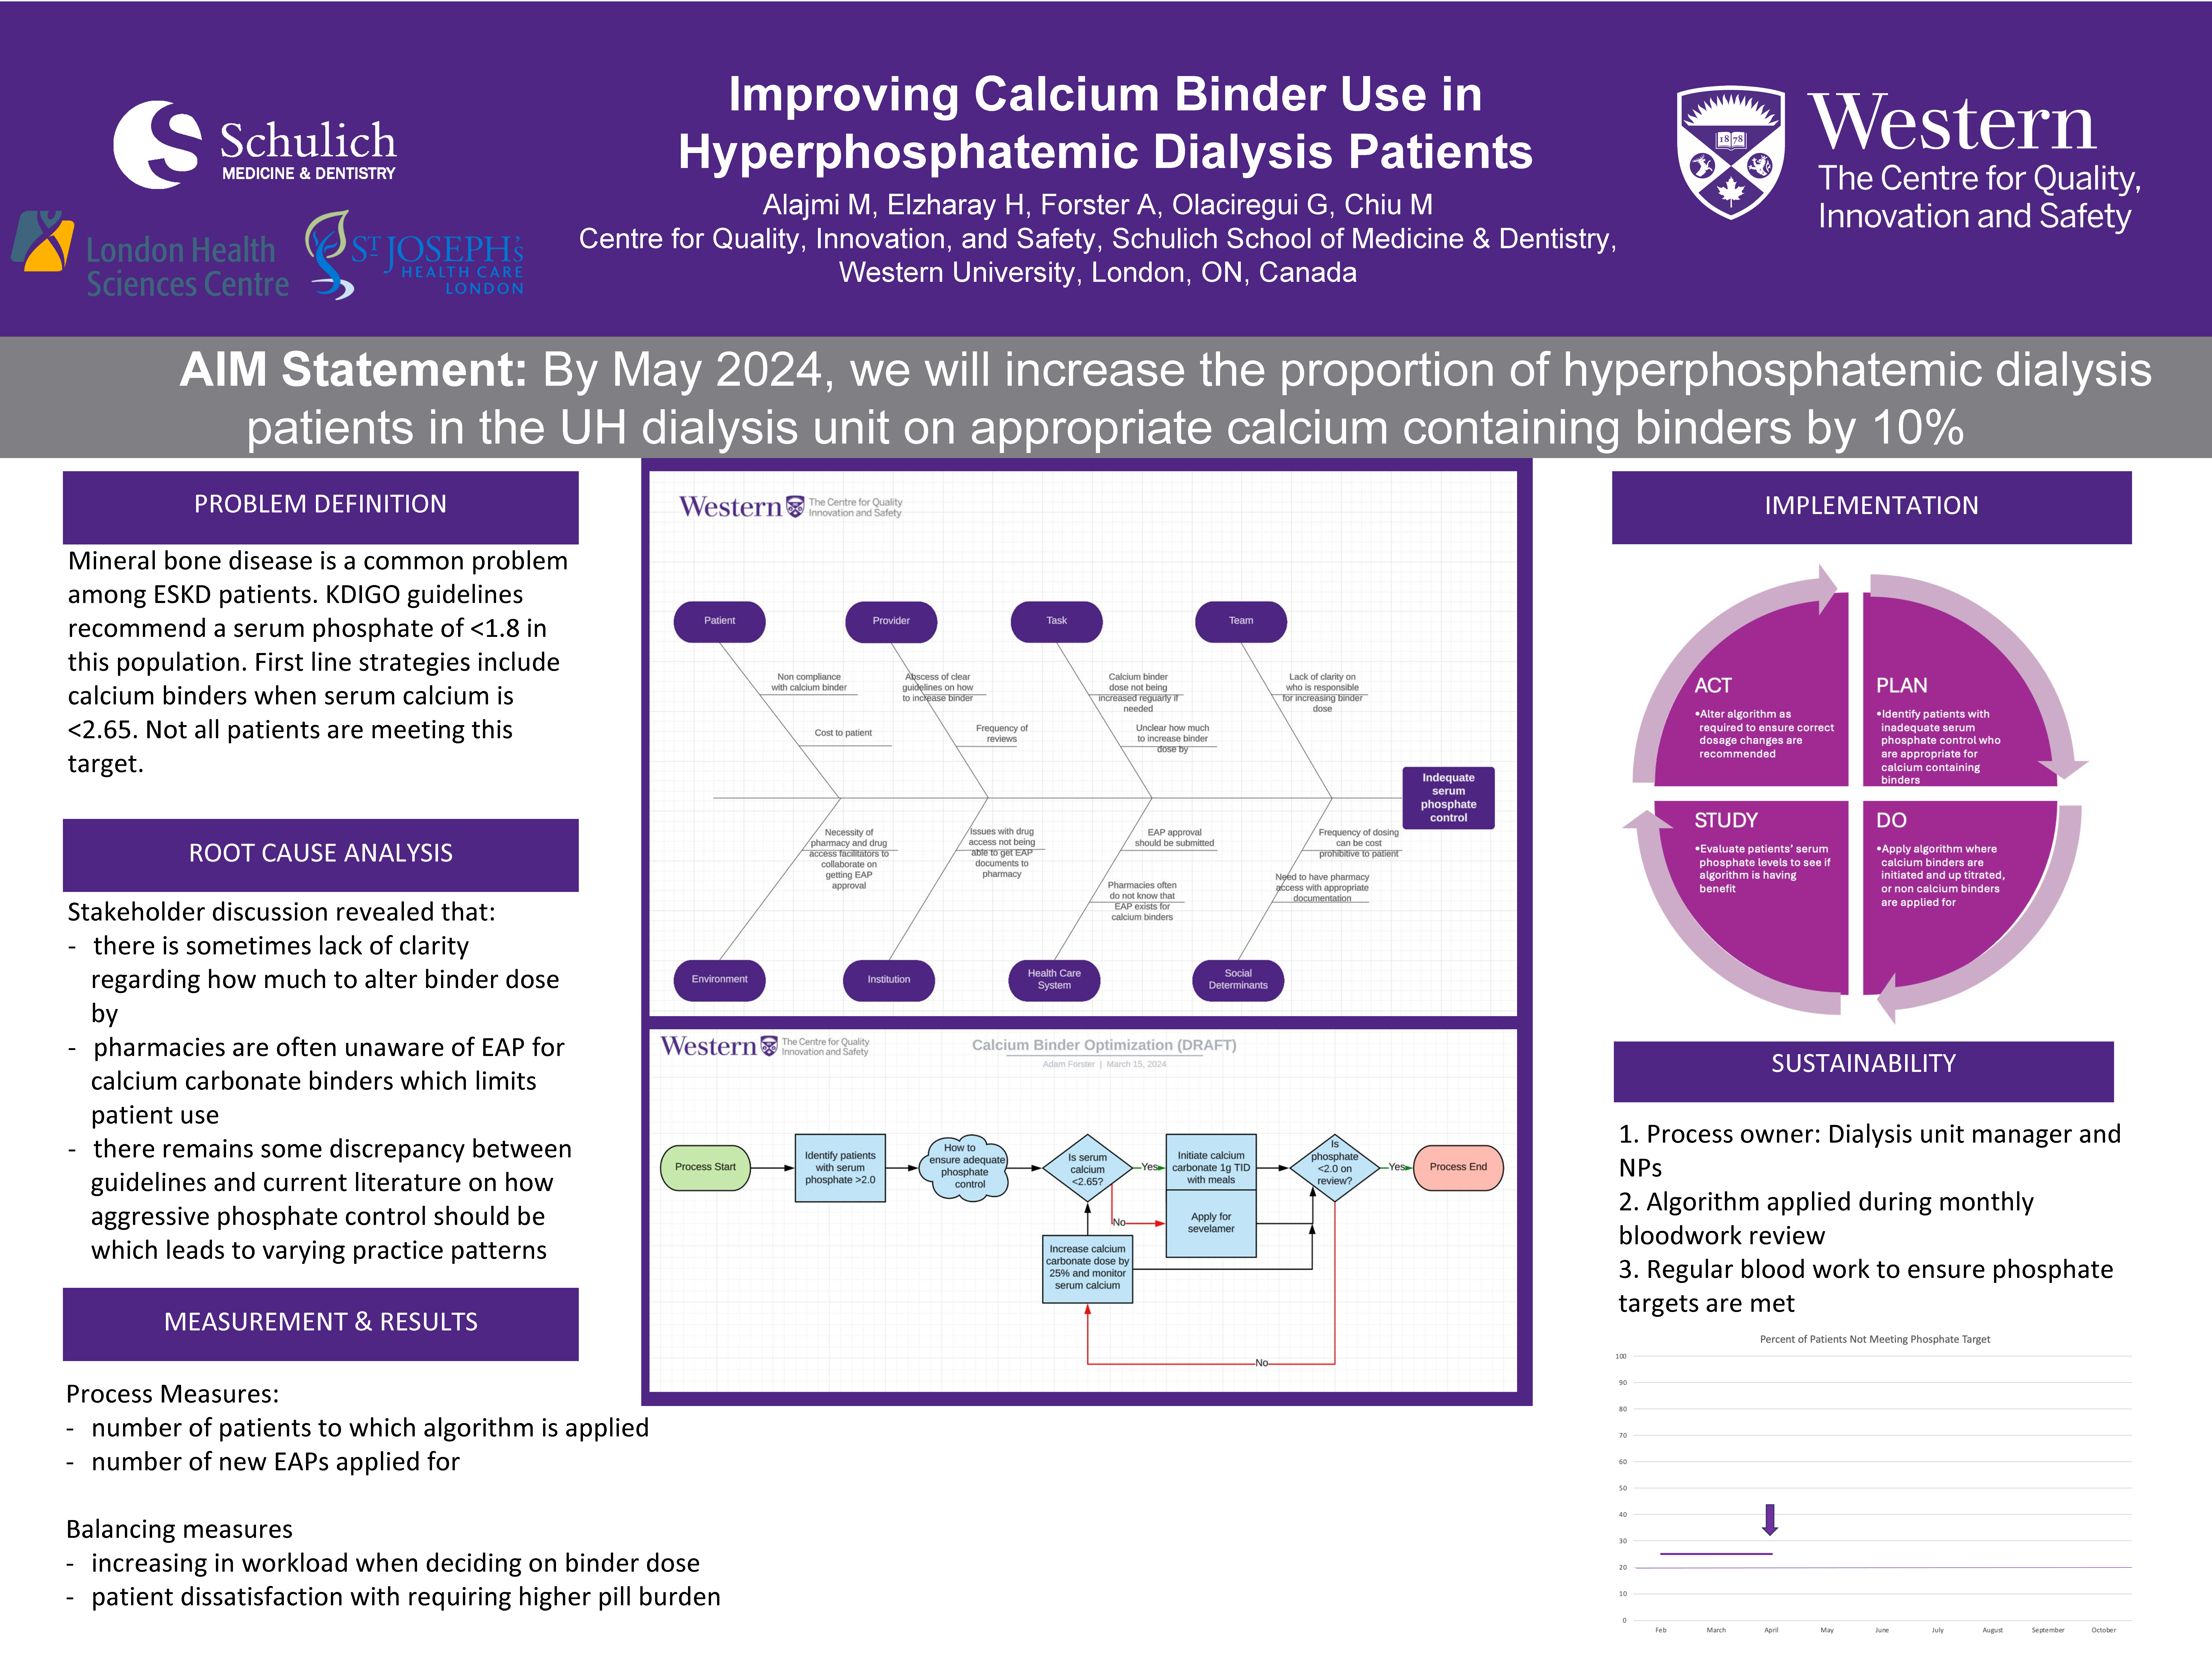 BISQ_2023-2024_Improving_Calcium_Binder_Use_in_Hyperphosphatemic_Dialysis_Patients_Poster.png